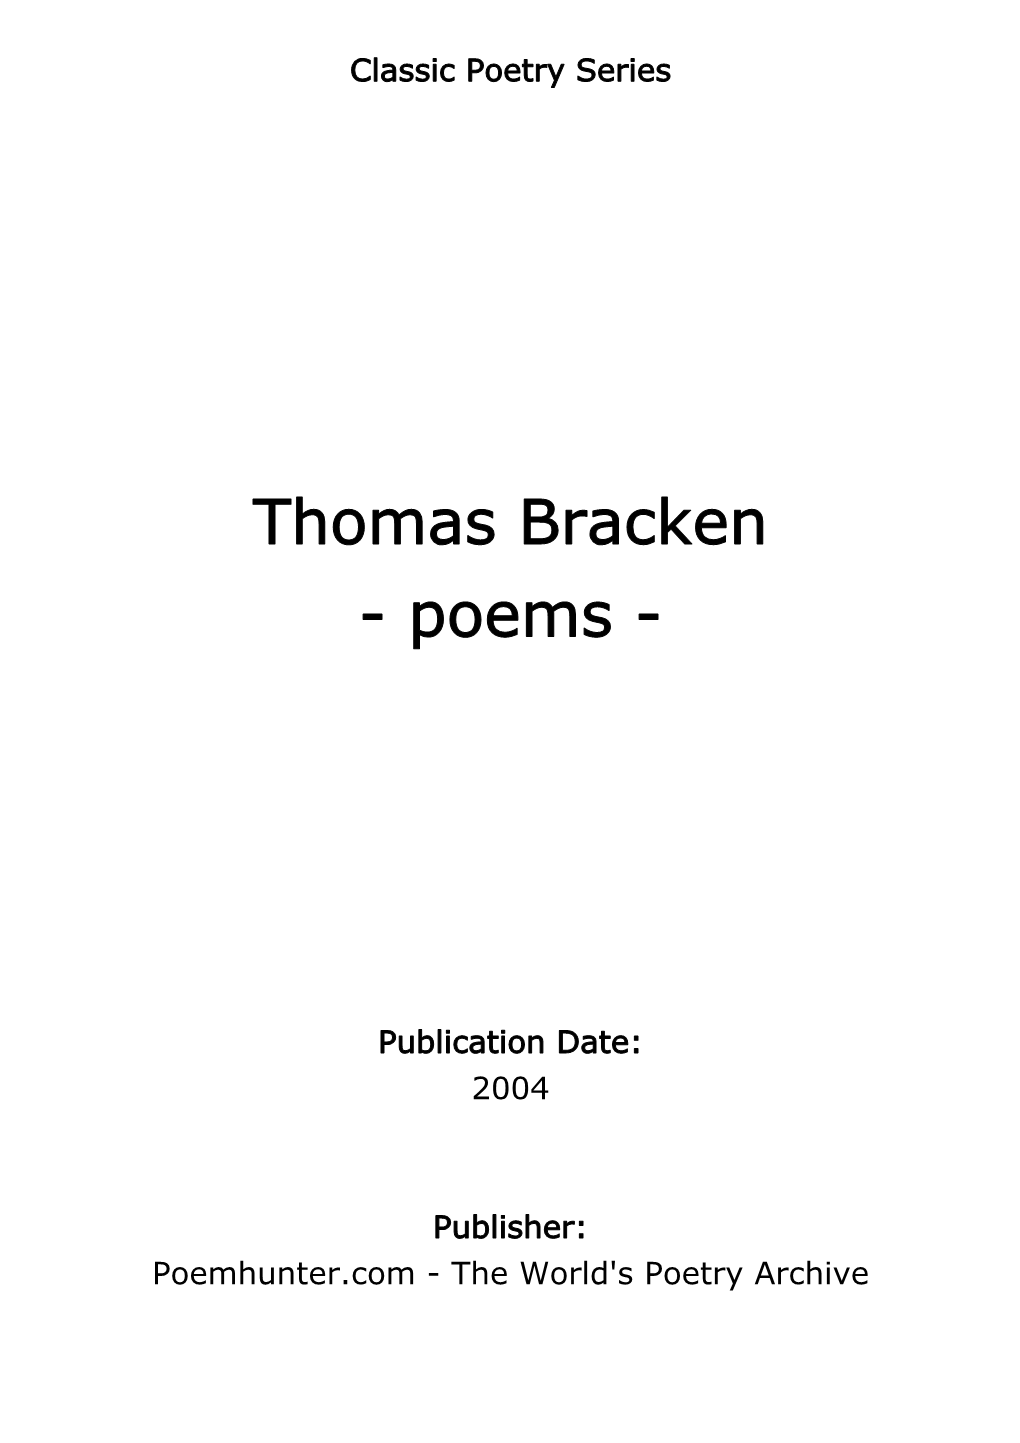 Thomas Bracken - Poems